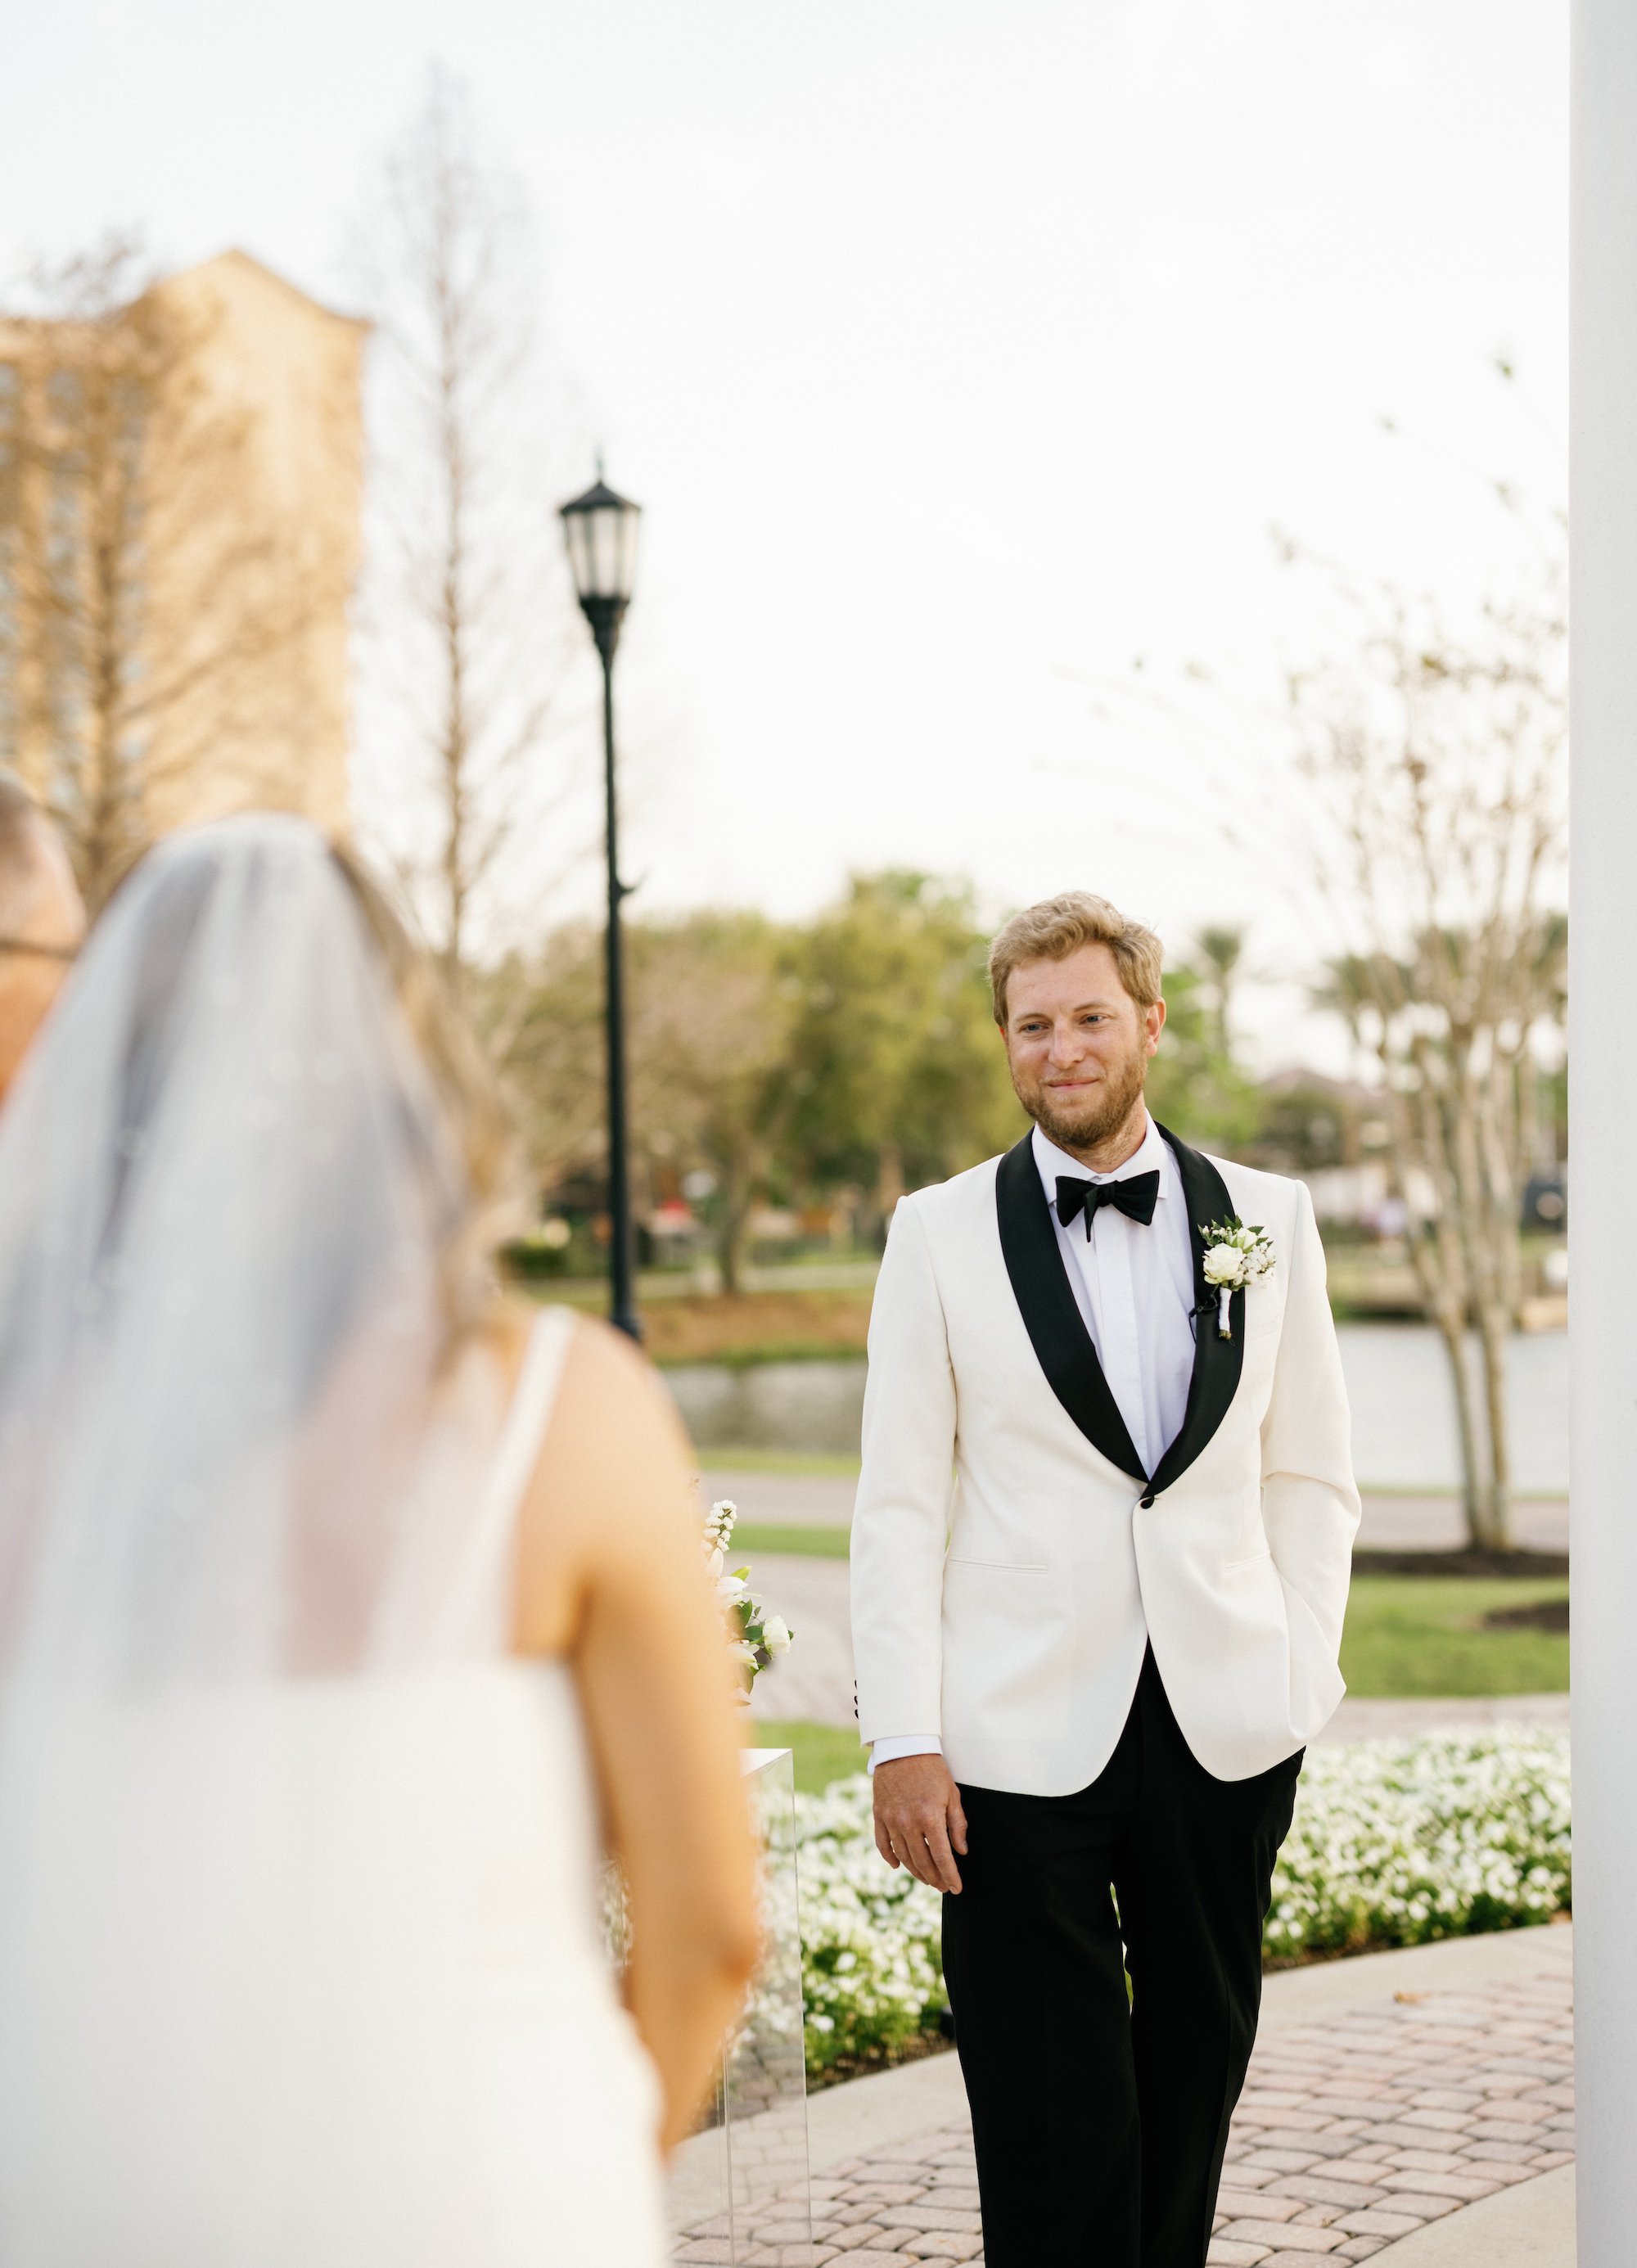 20Timeless White Courtyard Wedding | Ritz Carlton Orlando | Photographers Dewitt for Love Photography.jpg